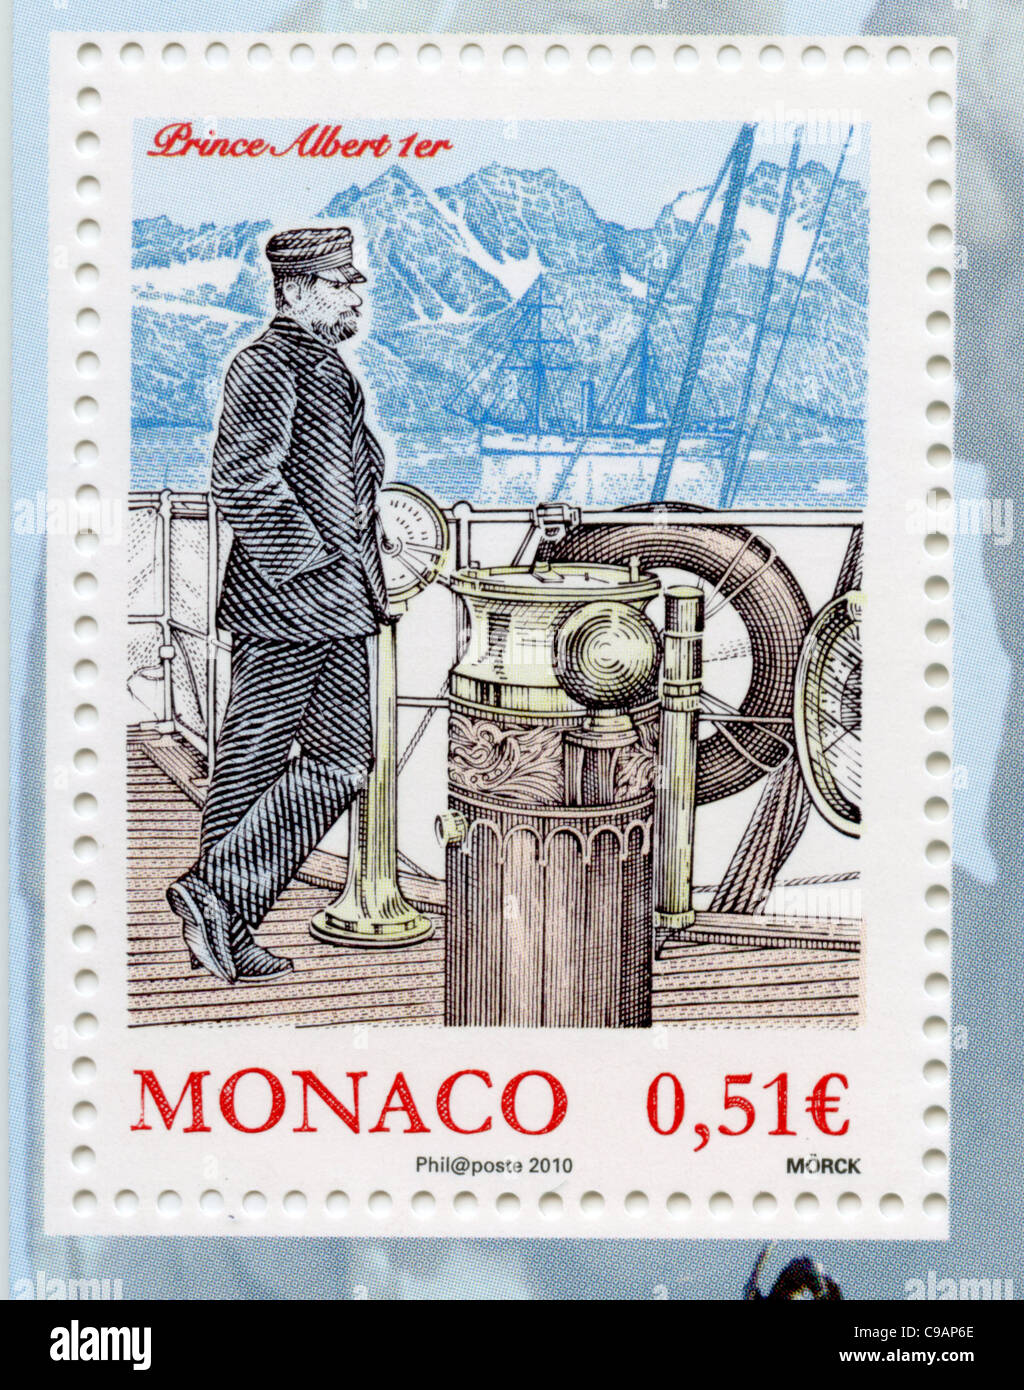 Prince Albert I Monaco postage stamp Stock Photo